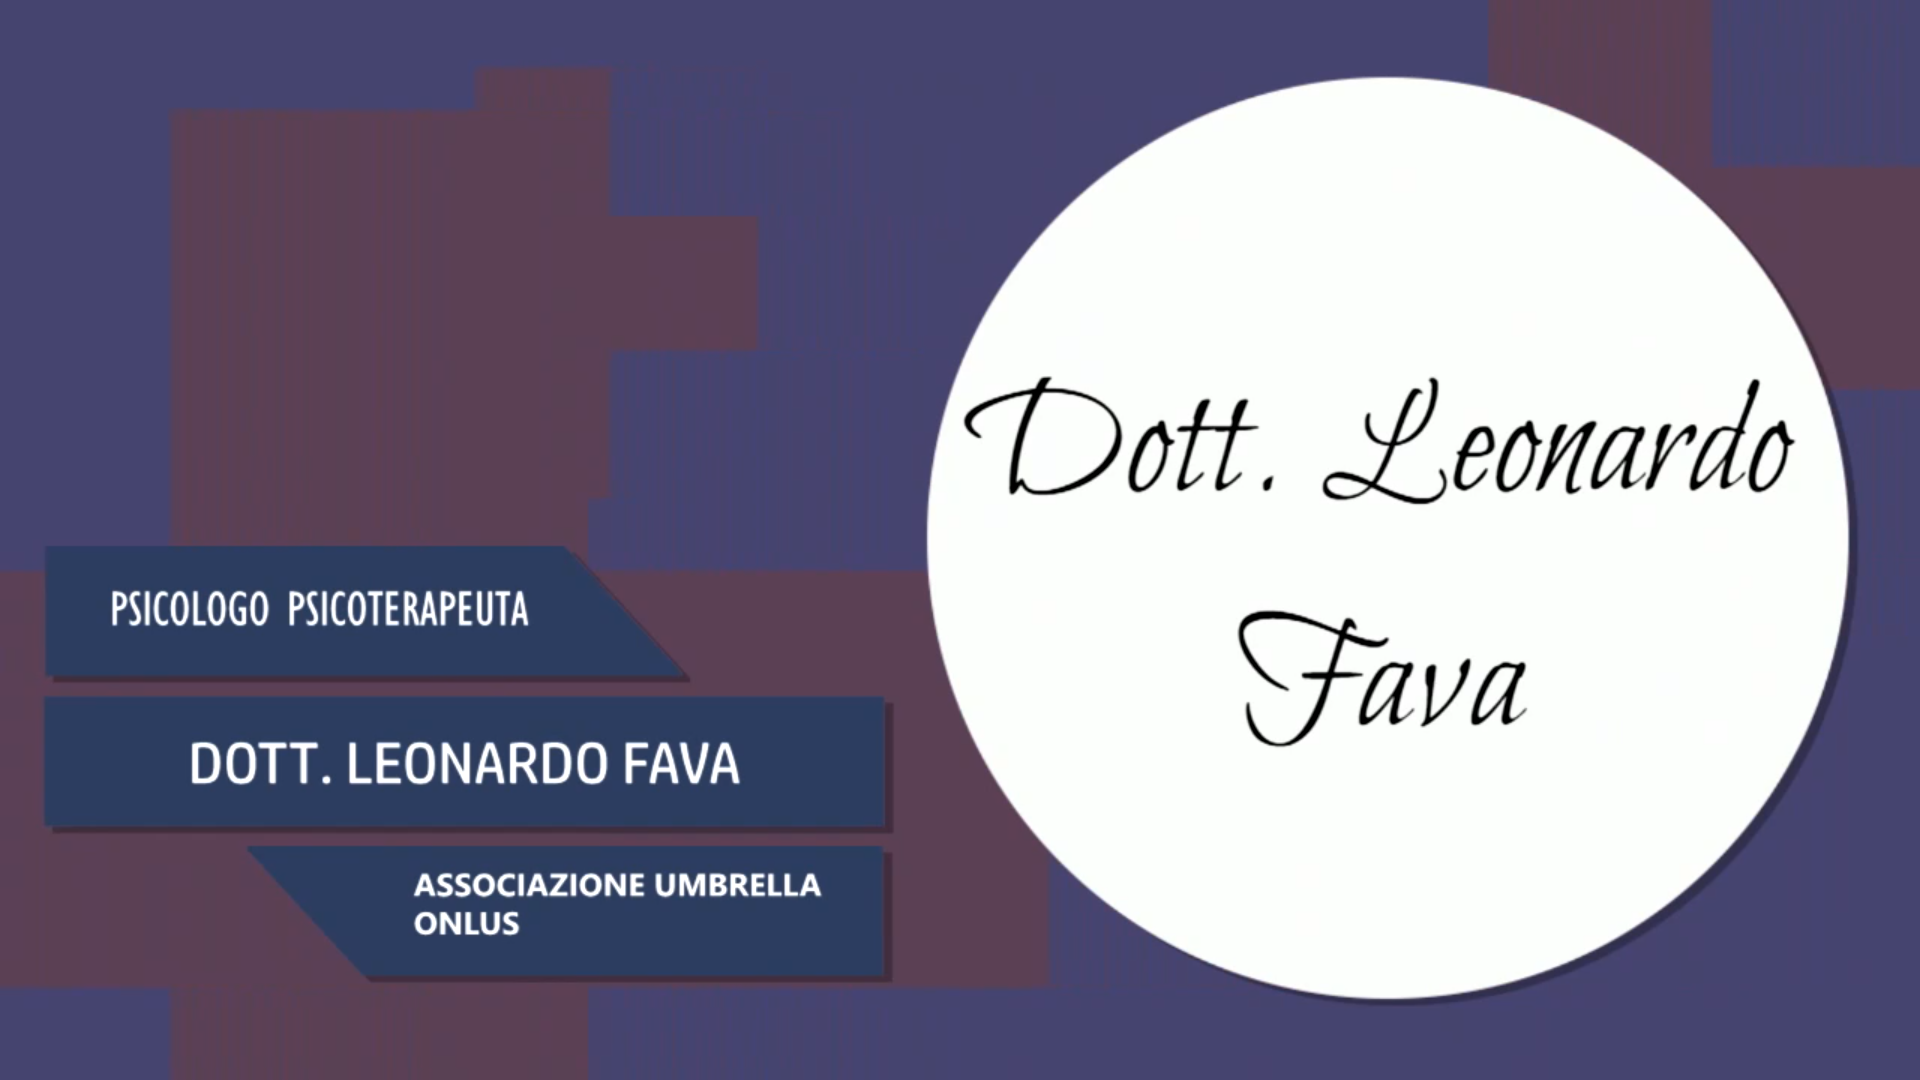 Intervista al Dott. Leonardo Fava – Associazione Umbrella Onlus